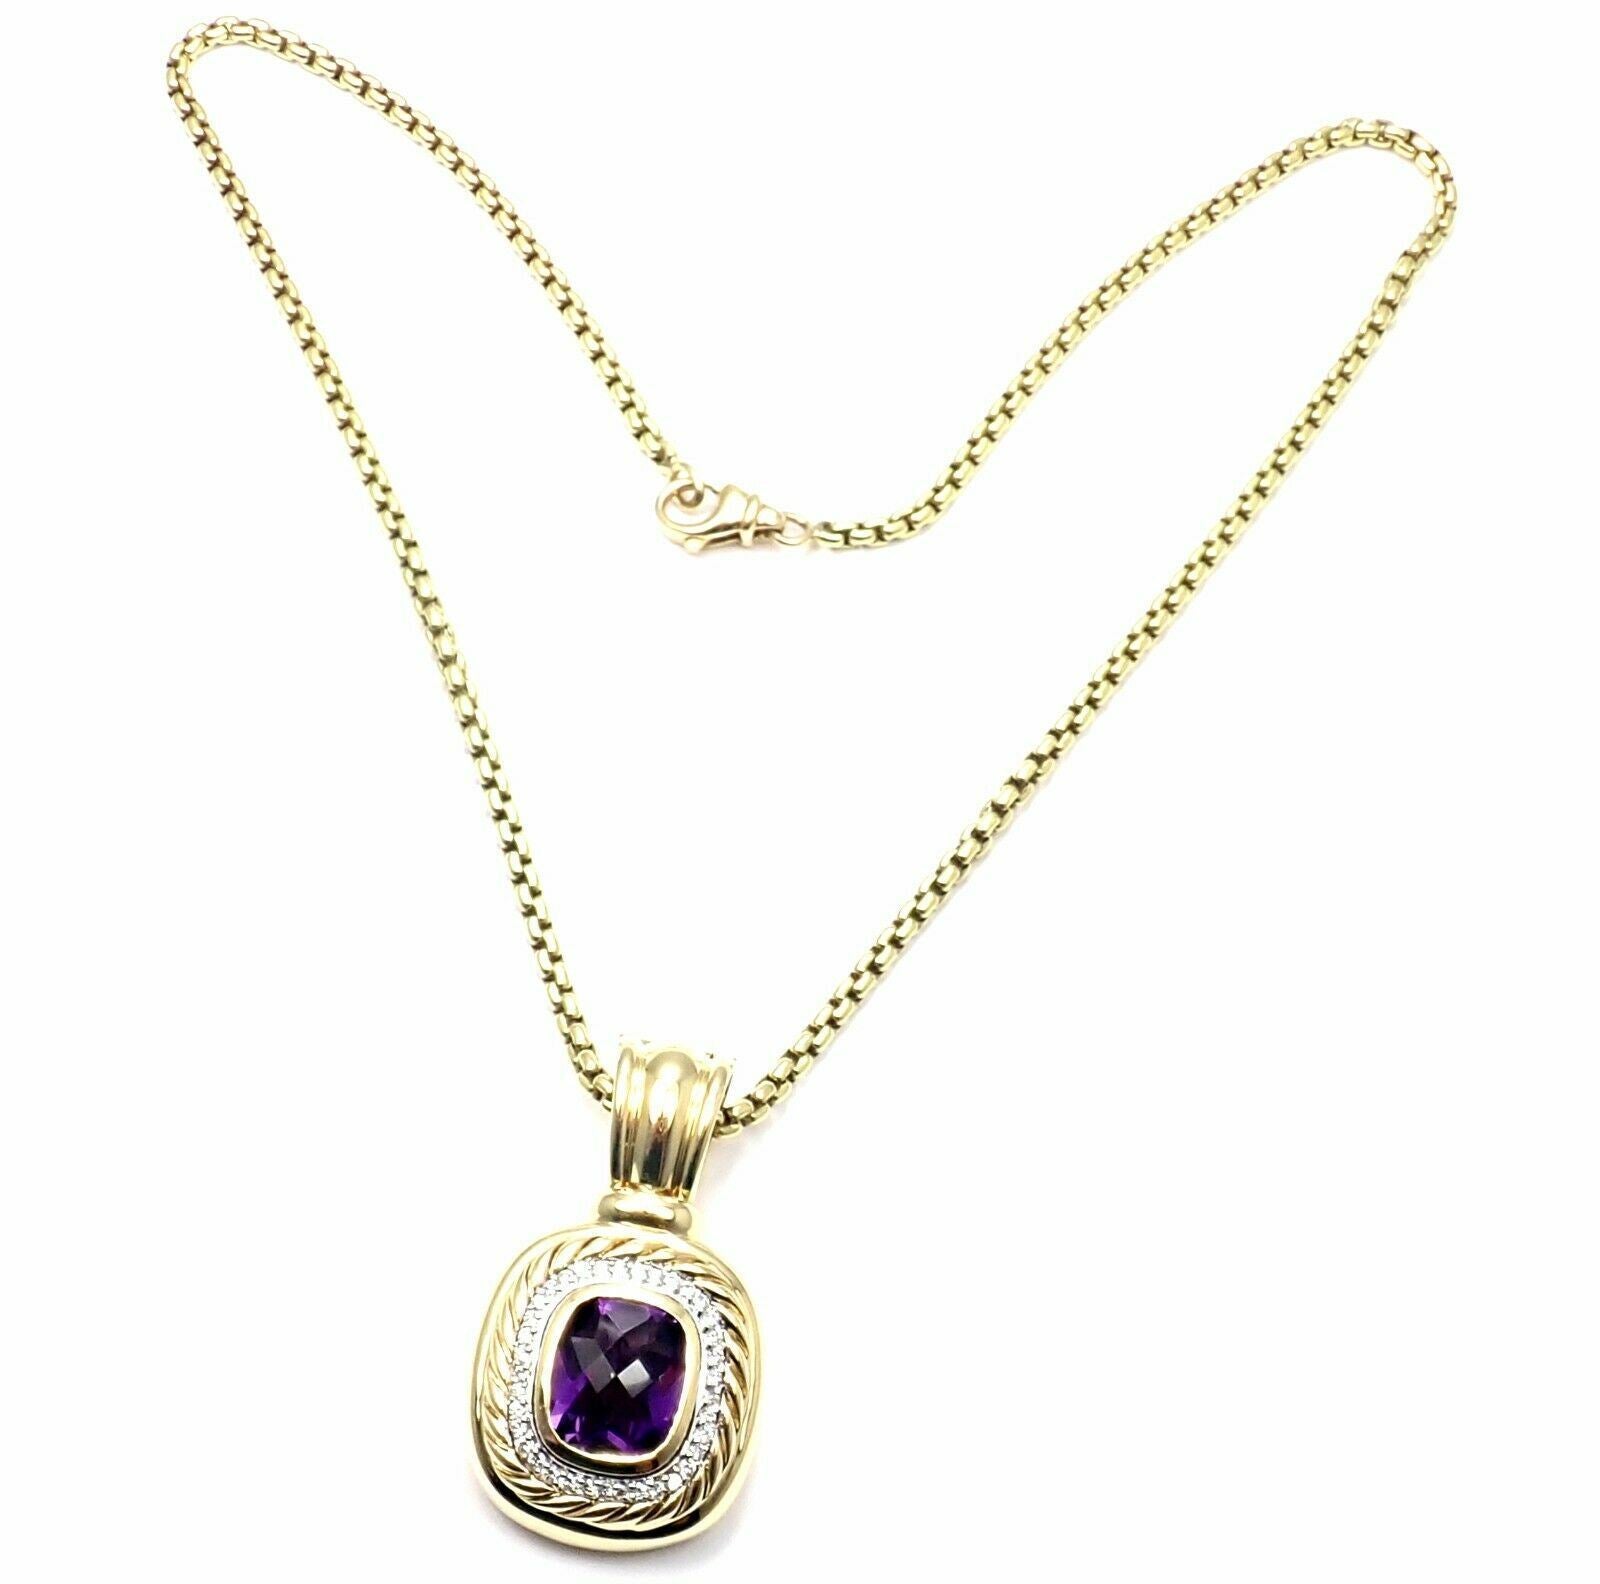 David Yurman Jewelry & Watches:Vintage & Antique Jewelry:Necklaces & Pendants David Yurman Cable 18k Yellow Gold Amethyst Diamond Large Pendant Chain Necklace